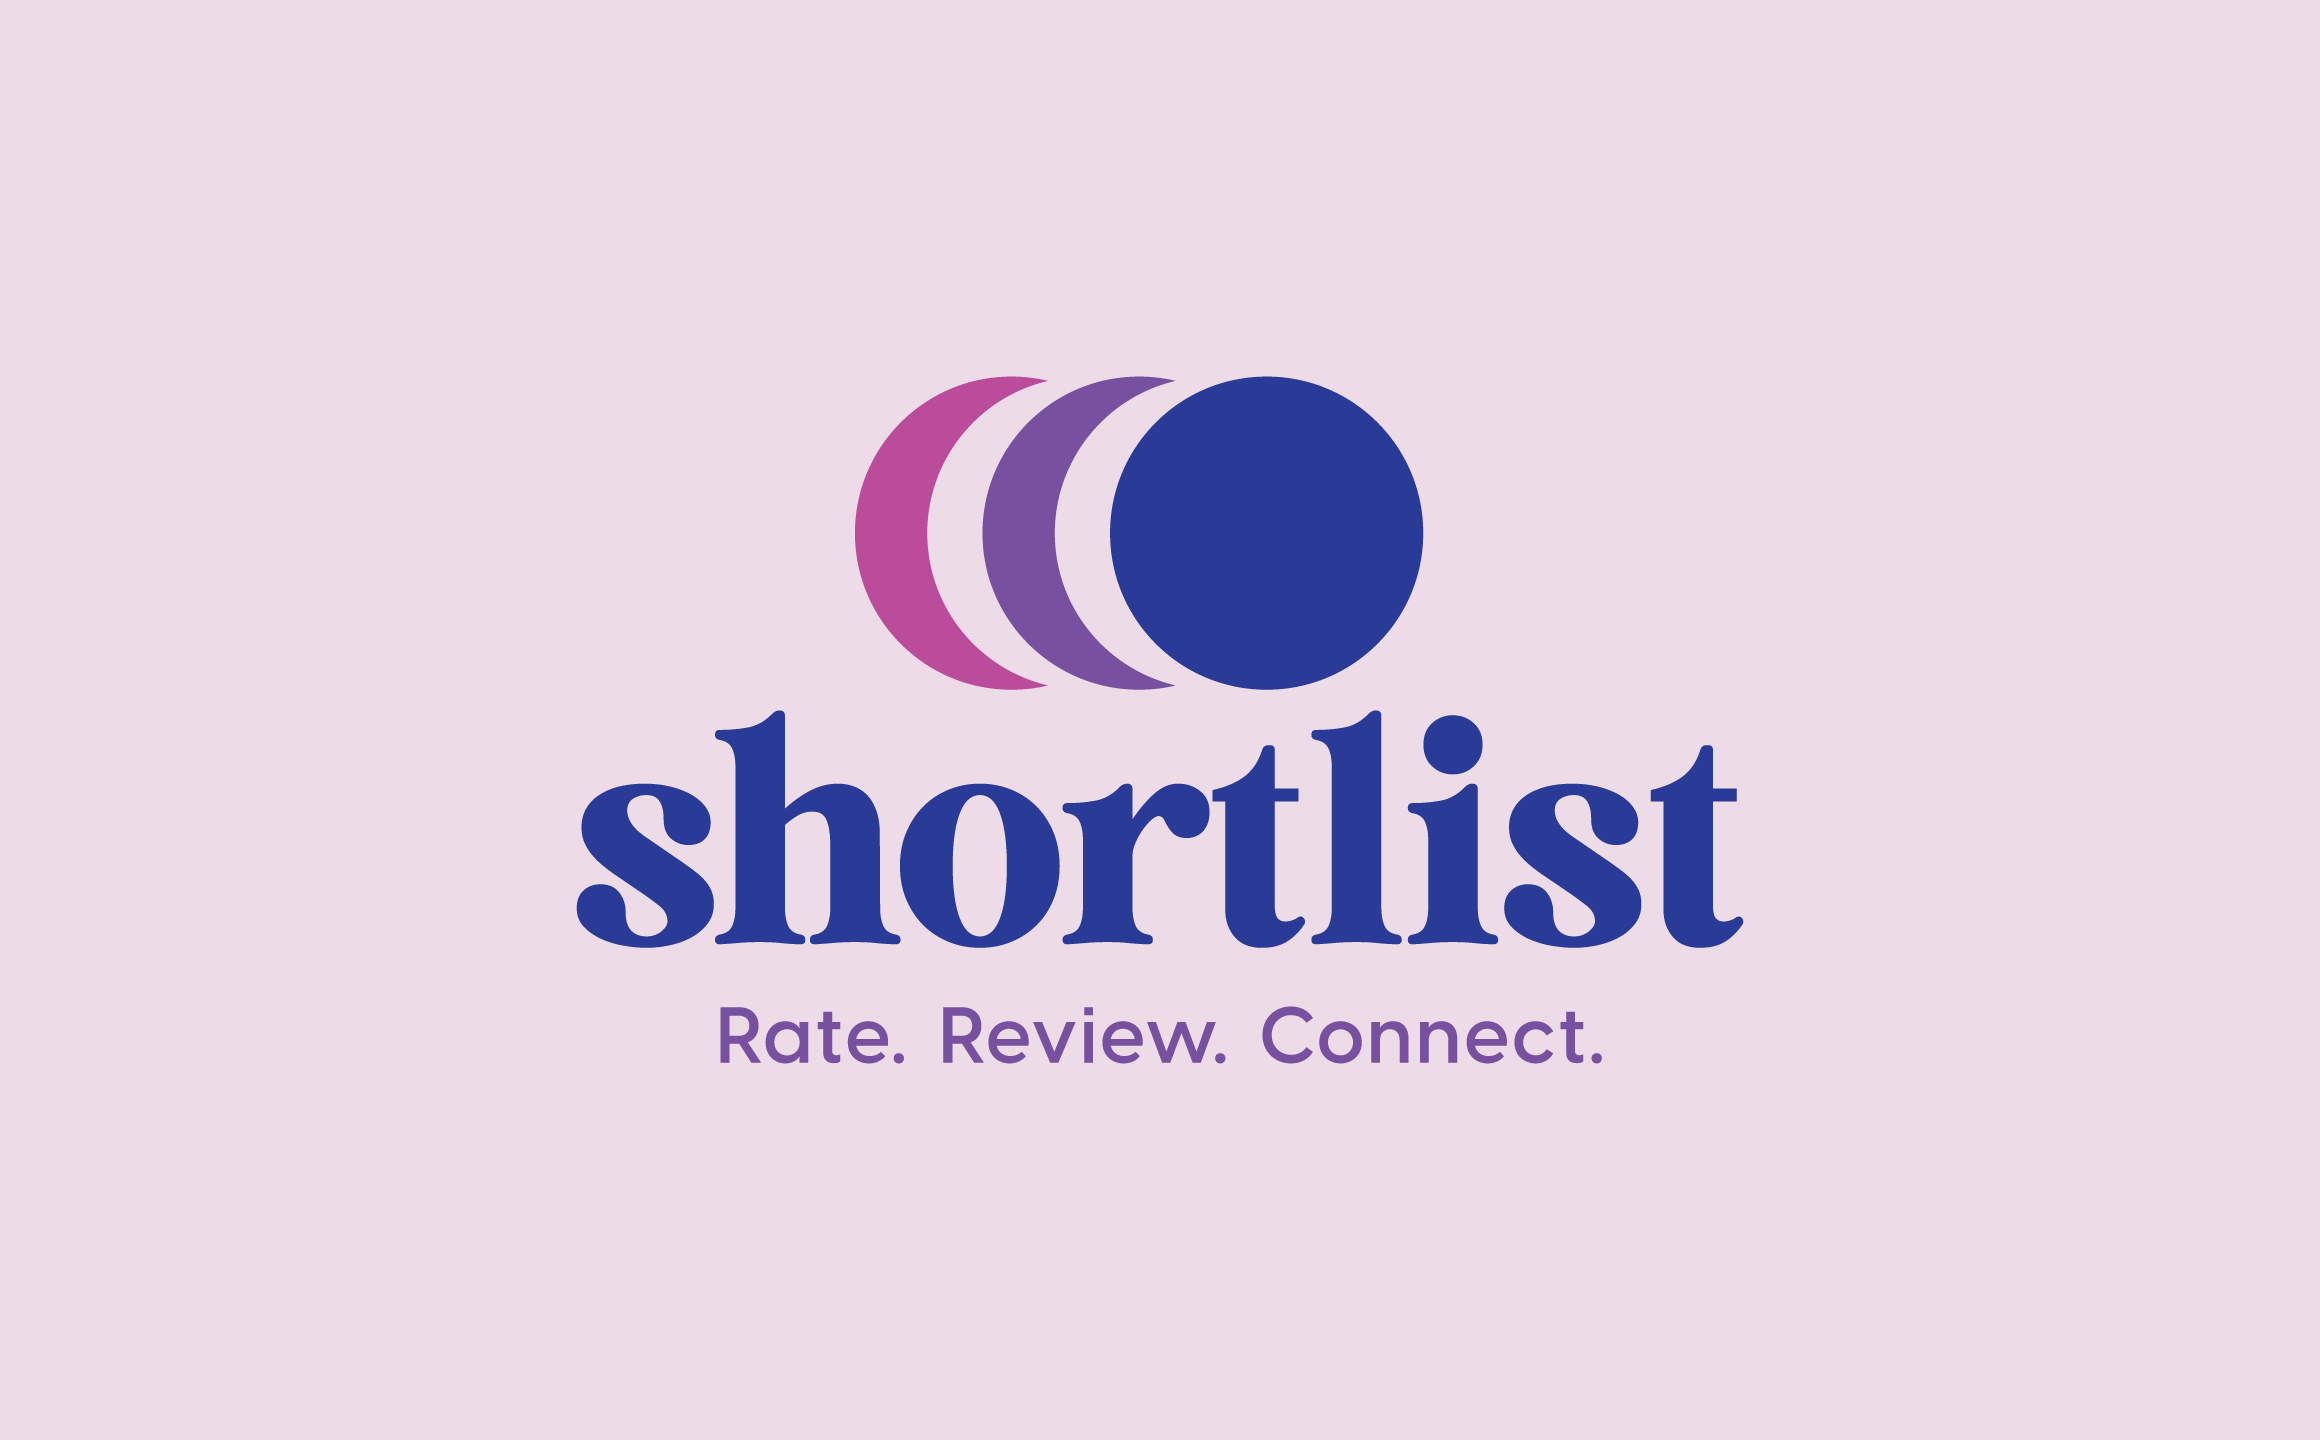 Shortlist logo on a pale pink background